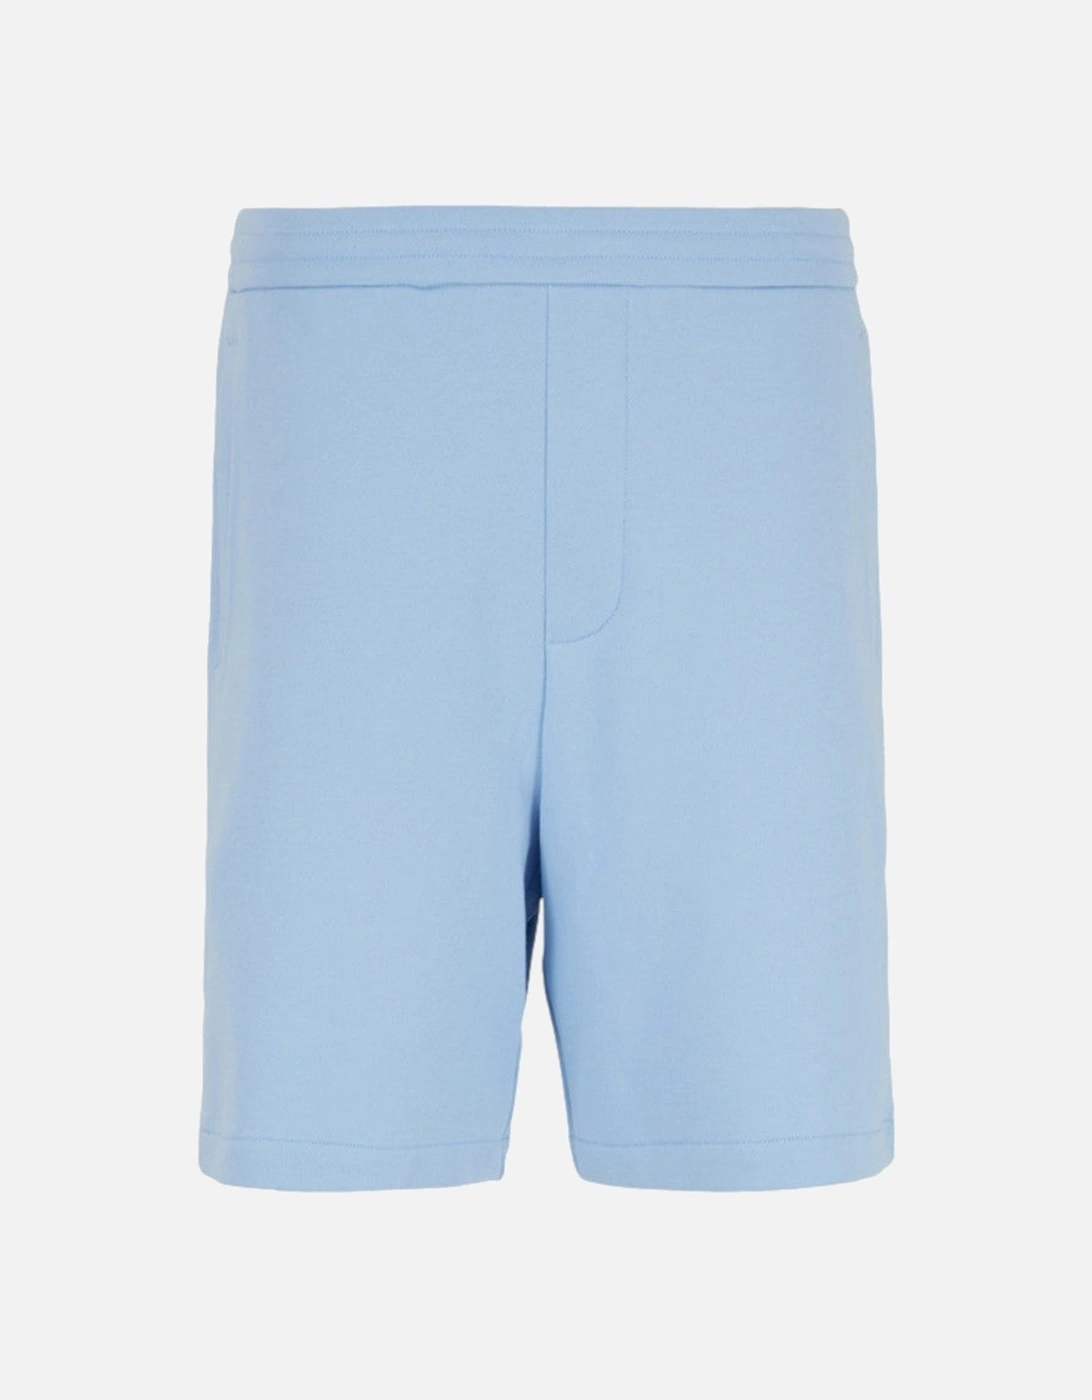 Milan Edition Shorts 15DF Placid Blue, 5 of 4